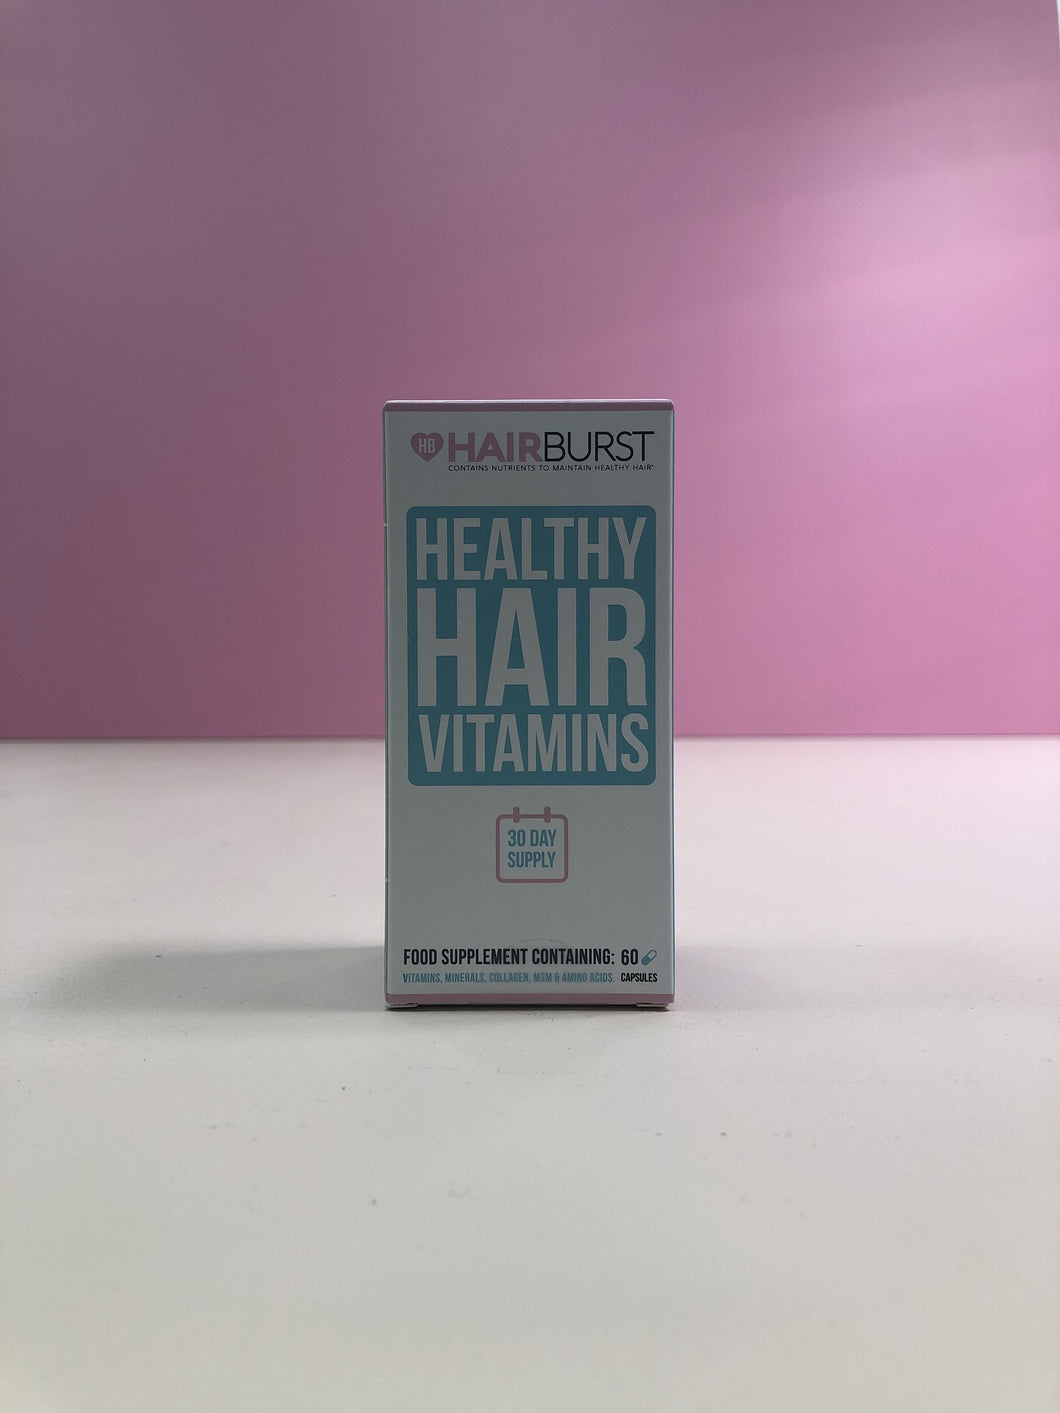 Hairburst - Healty hair vitamins - Front